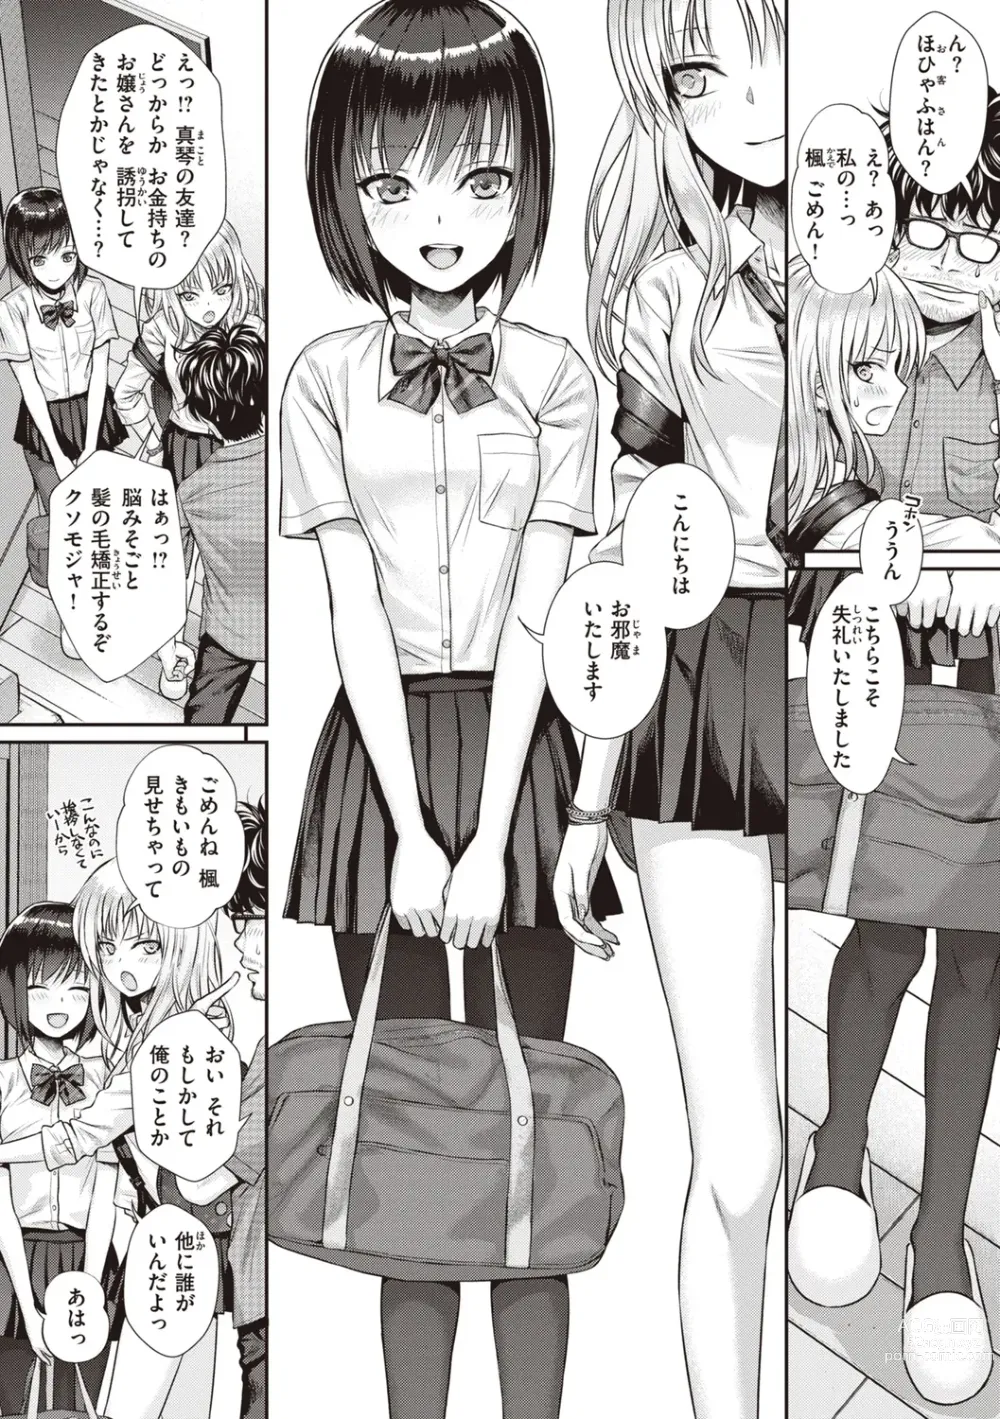 Page 26 of manga Prototype Teens